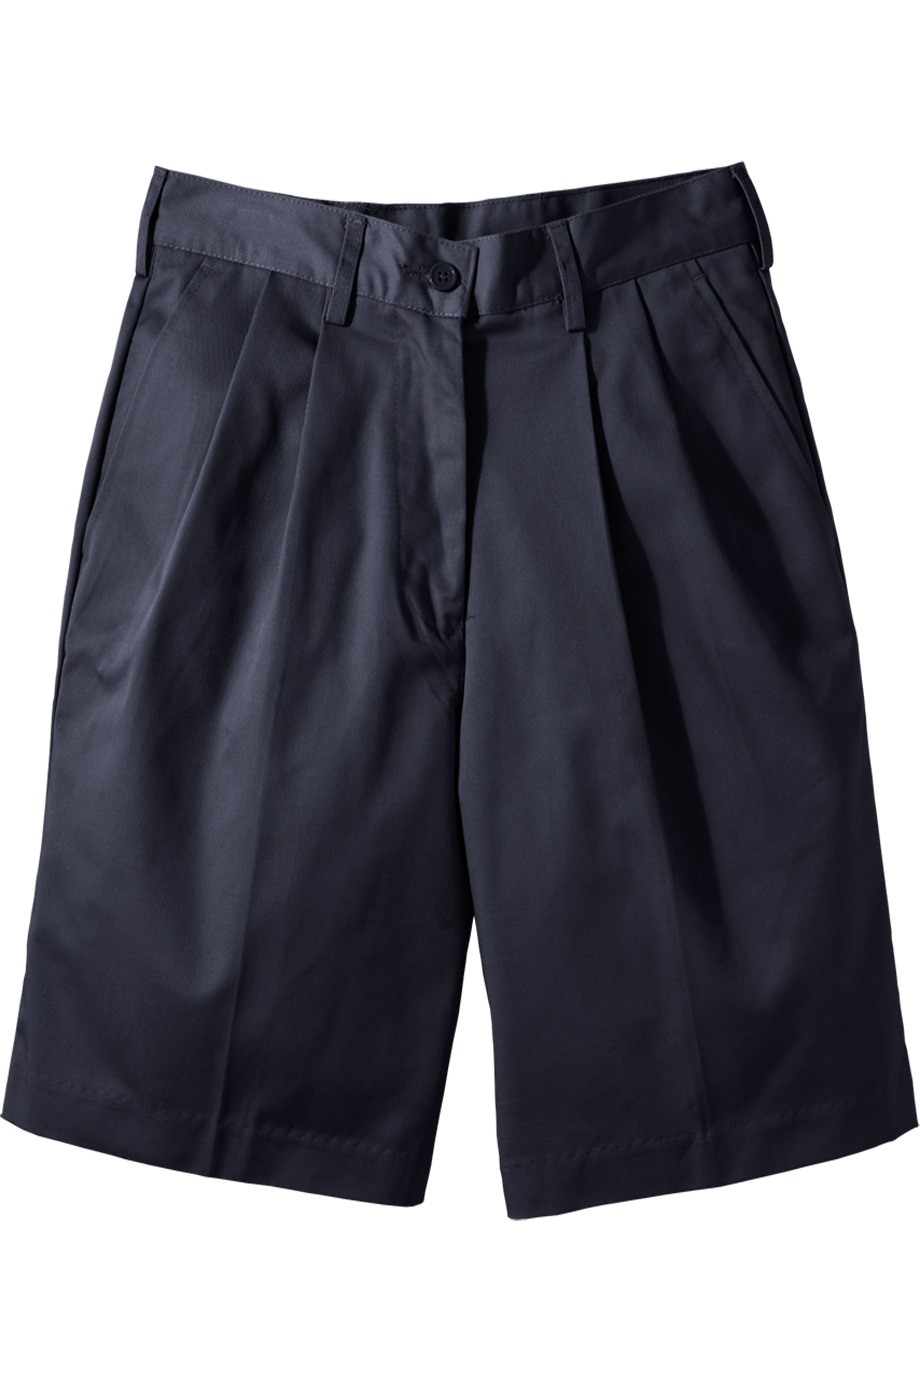 Edwards Garment 8467 - Women's Utility Pleated Short